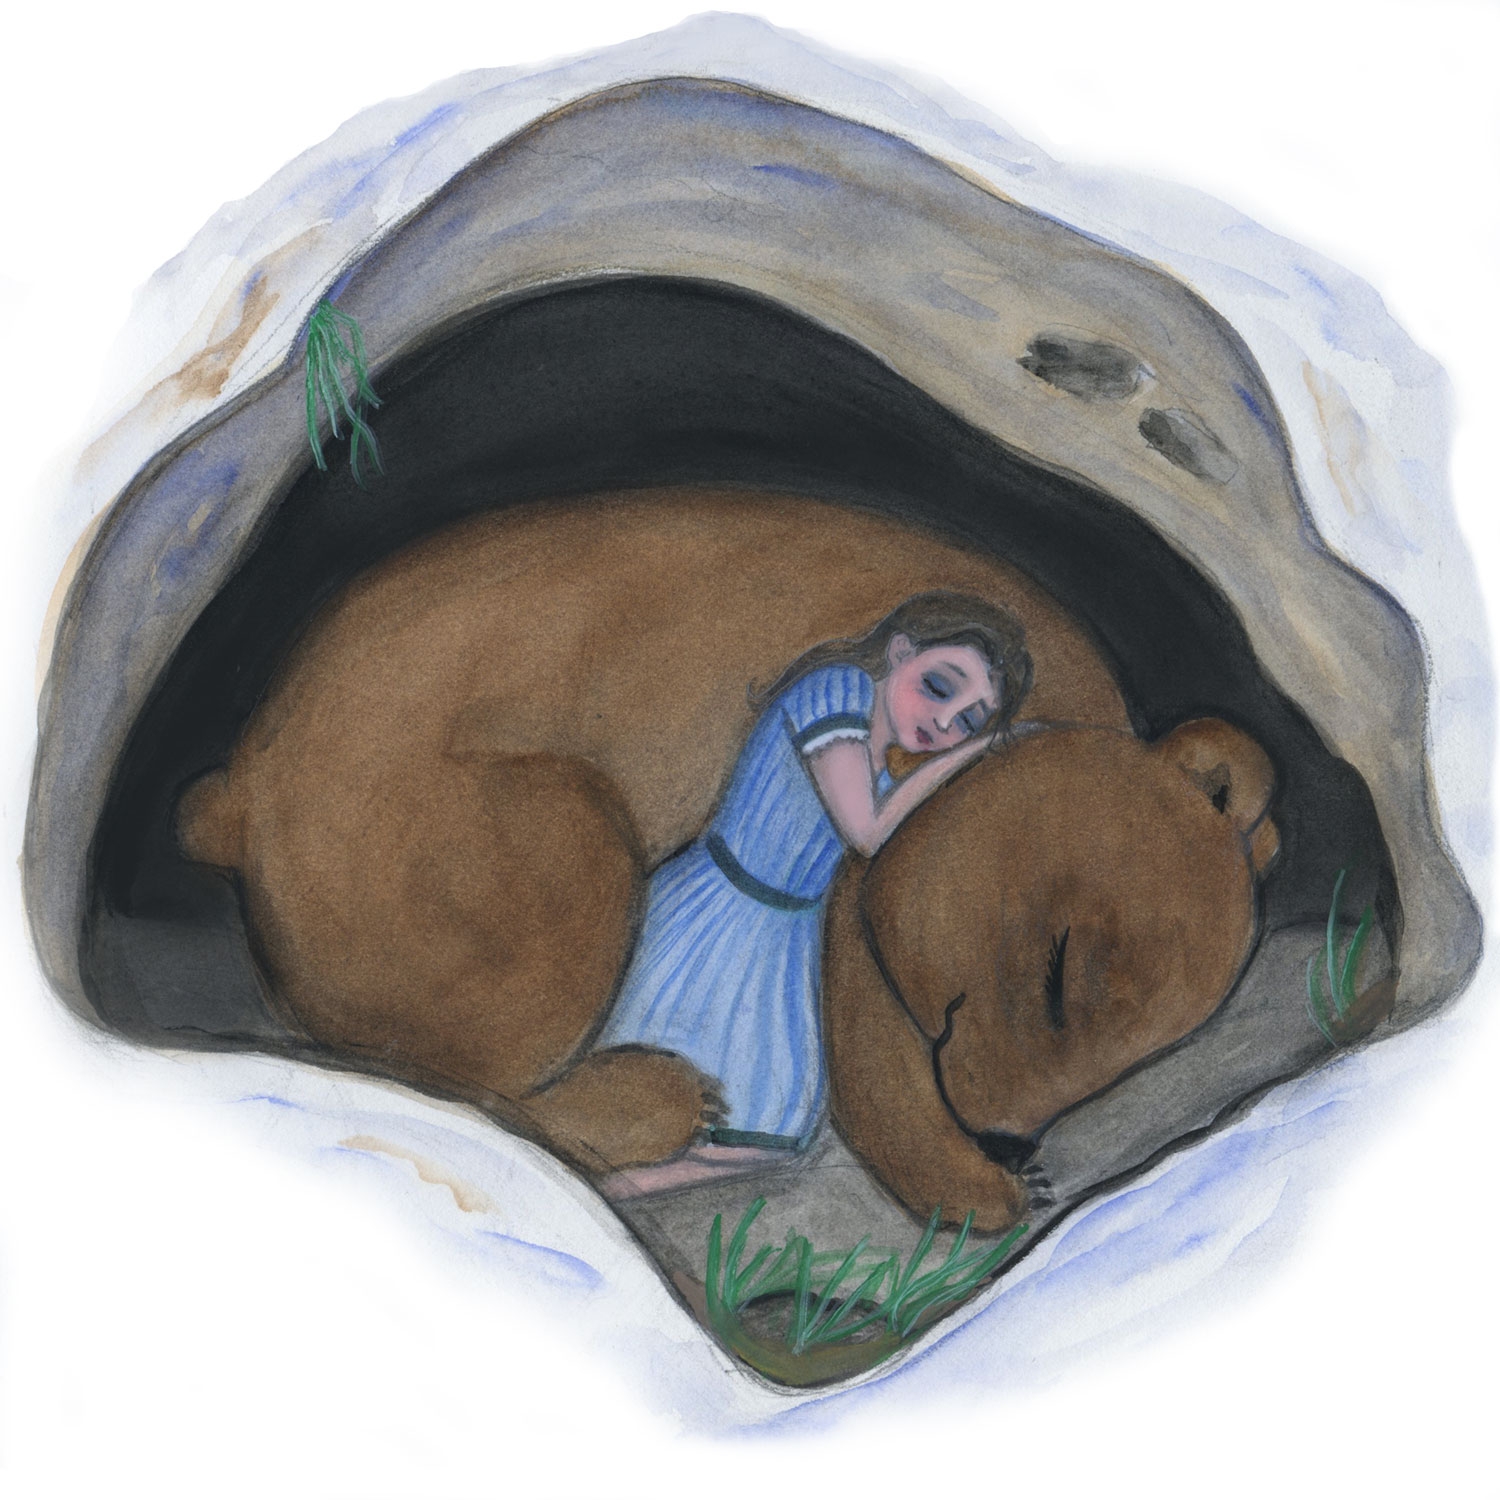 Спящий медведь - фото онлайн на витамин-п-байкальский.рф